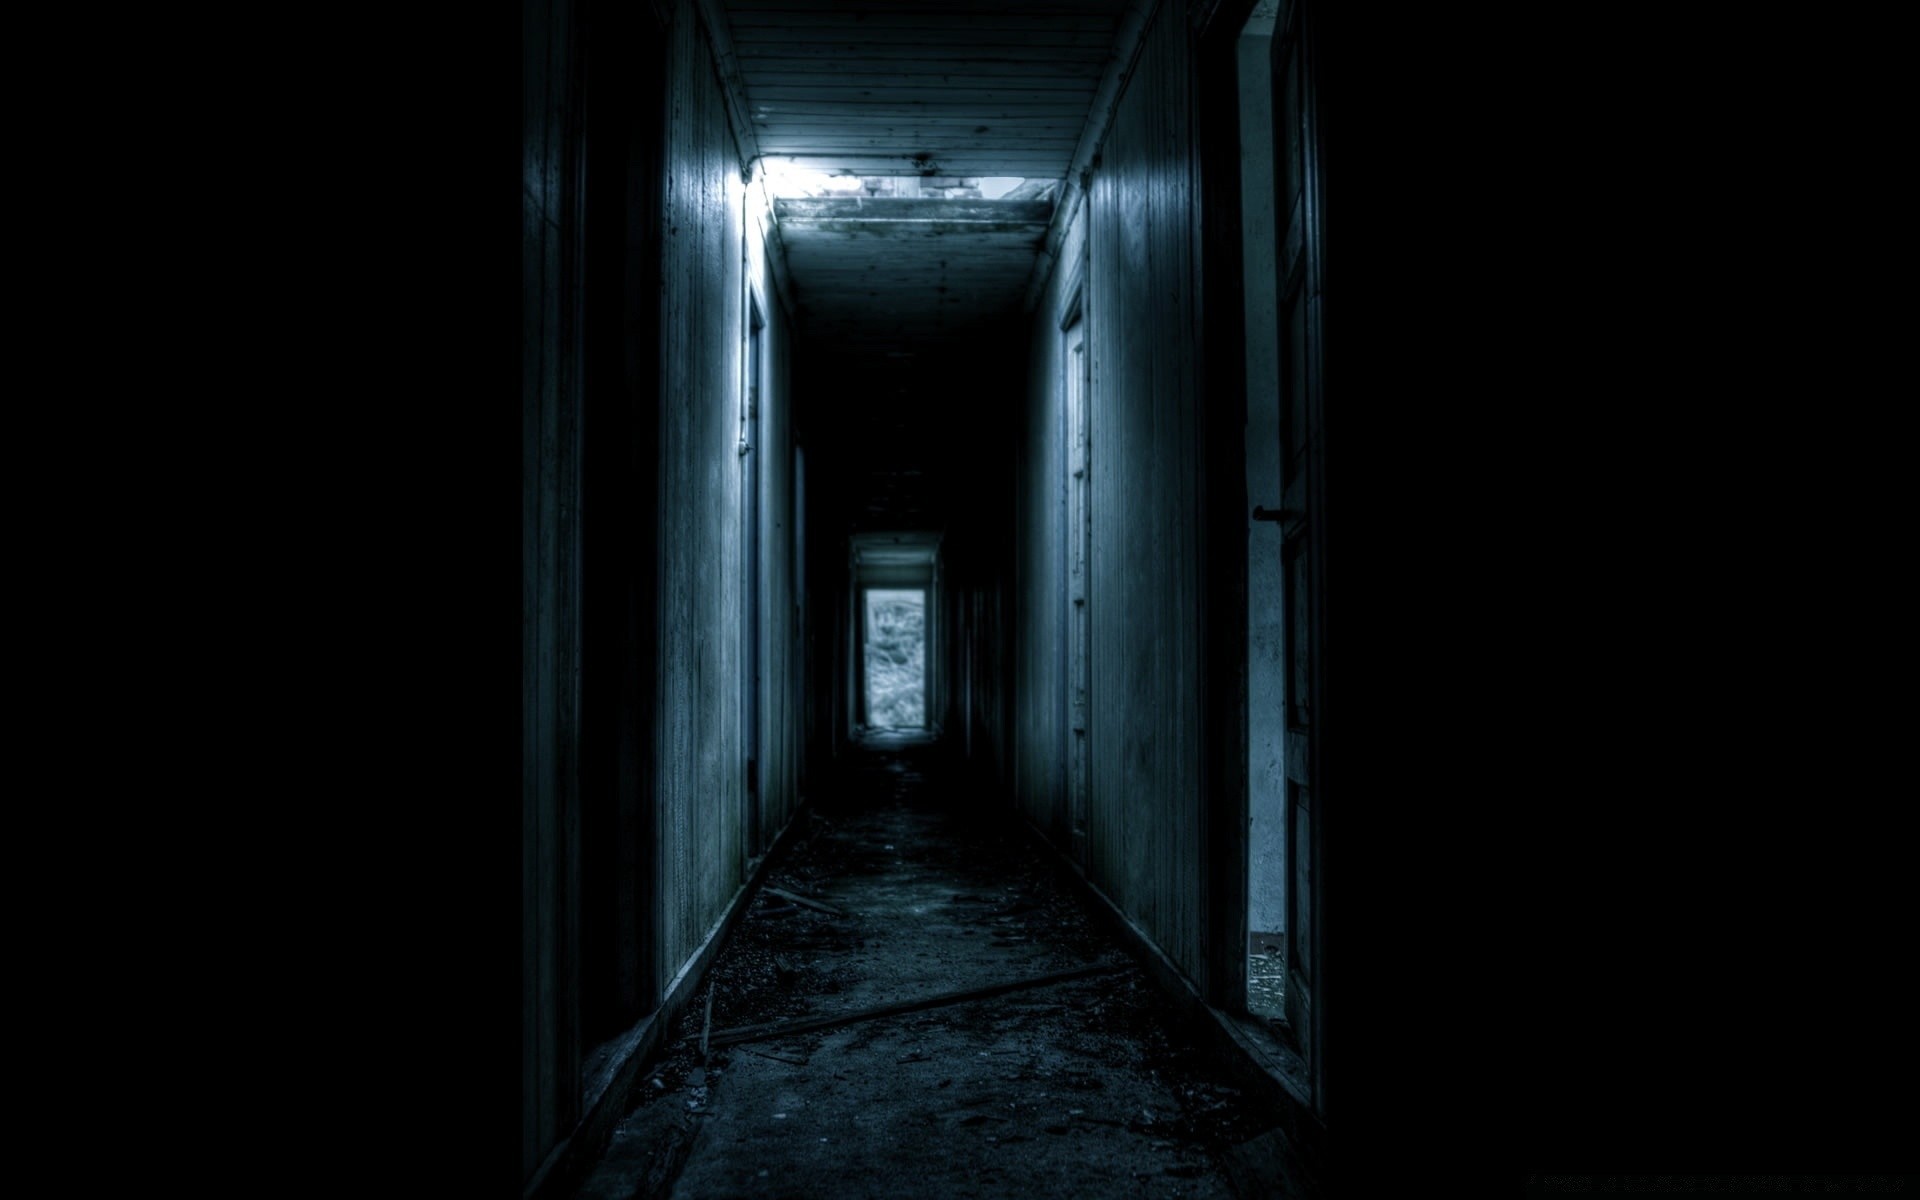 black tunnel eerie light dark hallway tube indoors shadow skittish scary door passage architecture mystery horror creepy abandoned